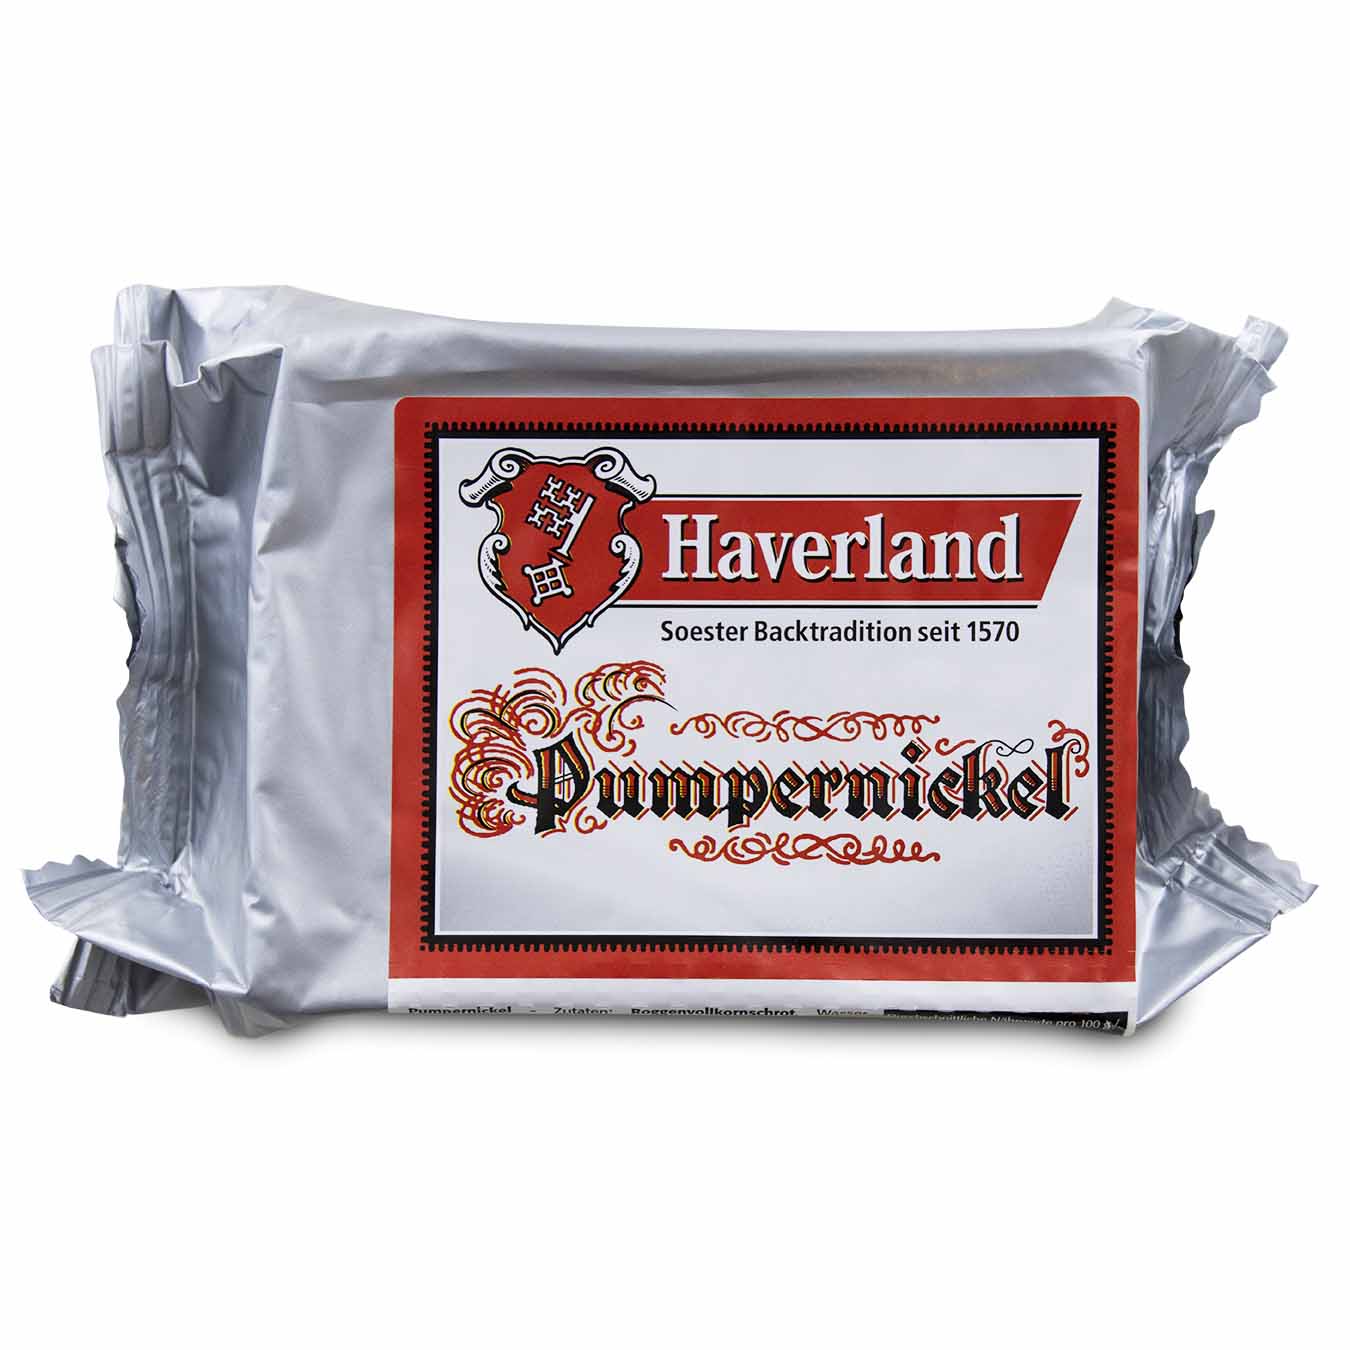 Soester Pumpernickel Brot von Haverland 500g-zoom